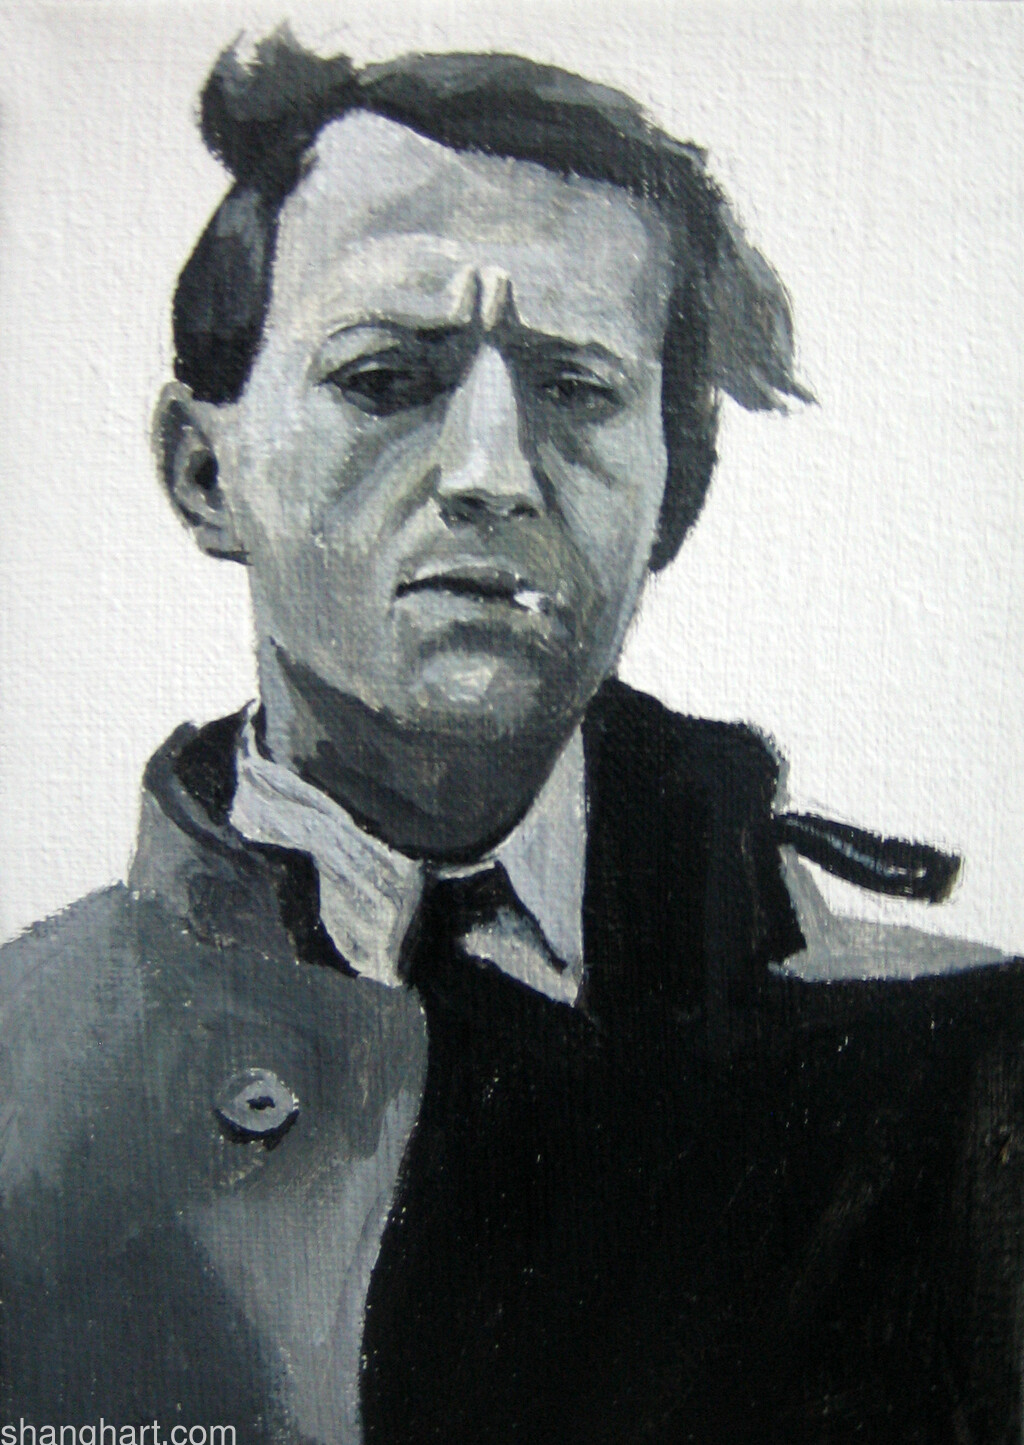 2008, 20x14cm, oil on canvas